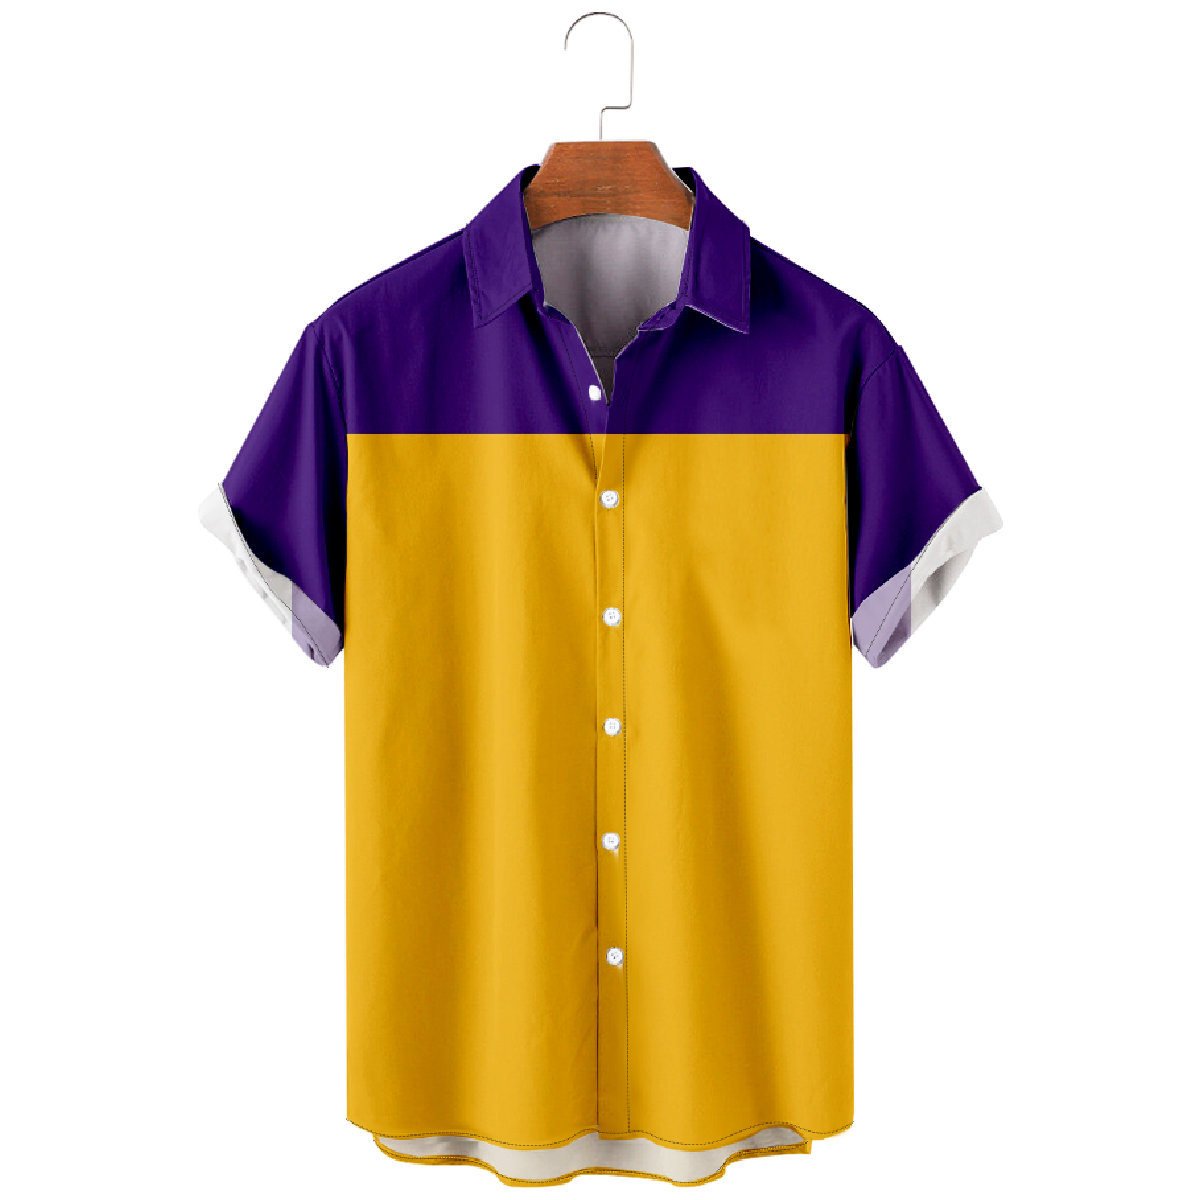 Mens American Football Minnesota Purple and Gold Button Up Shirt Short Sleeve Regular Fit Breathable Shirt